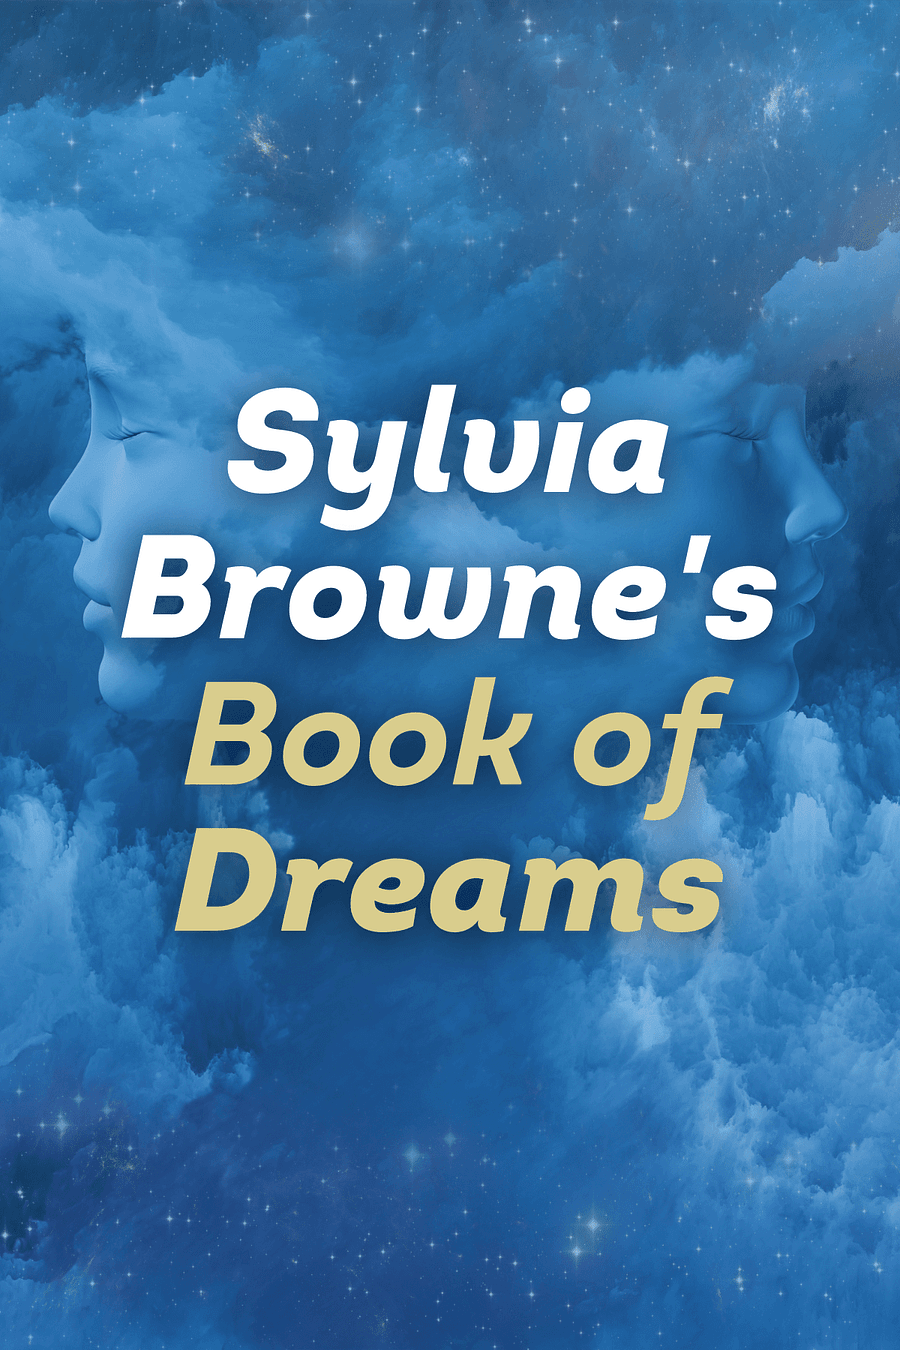 Sylvia Browne's Book of Dreams by Sylvia Browne, Lindsay Harrison - Book Summary